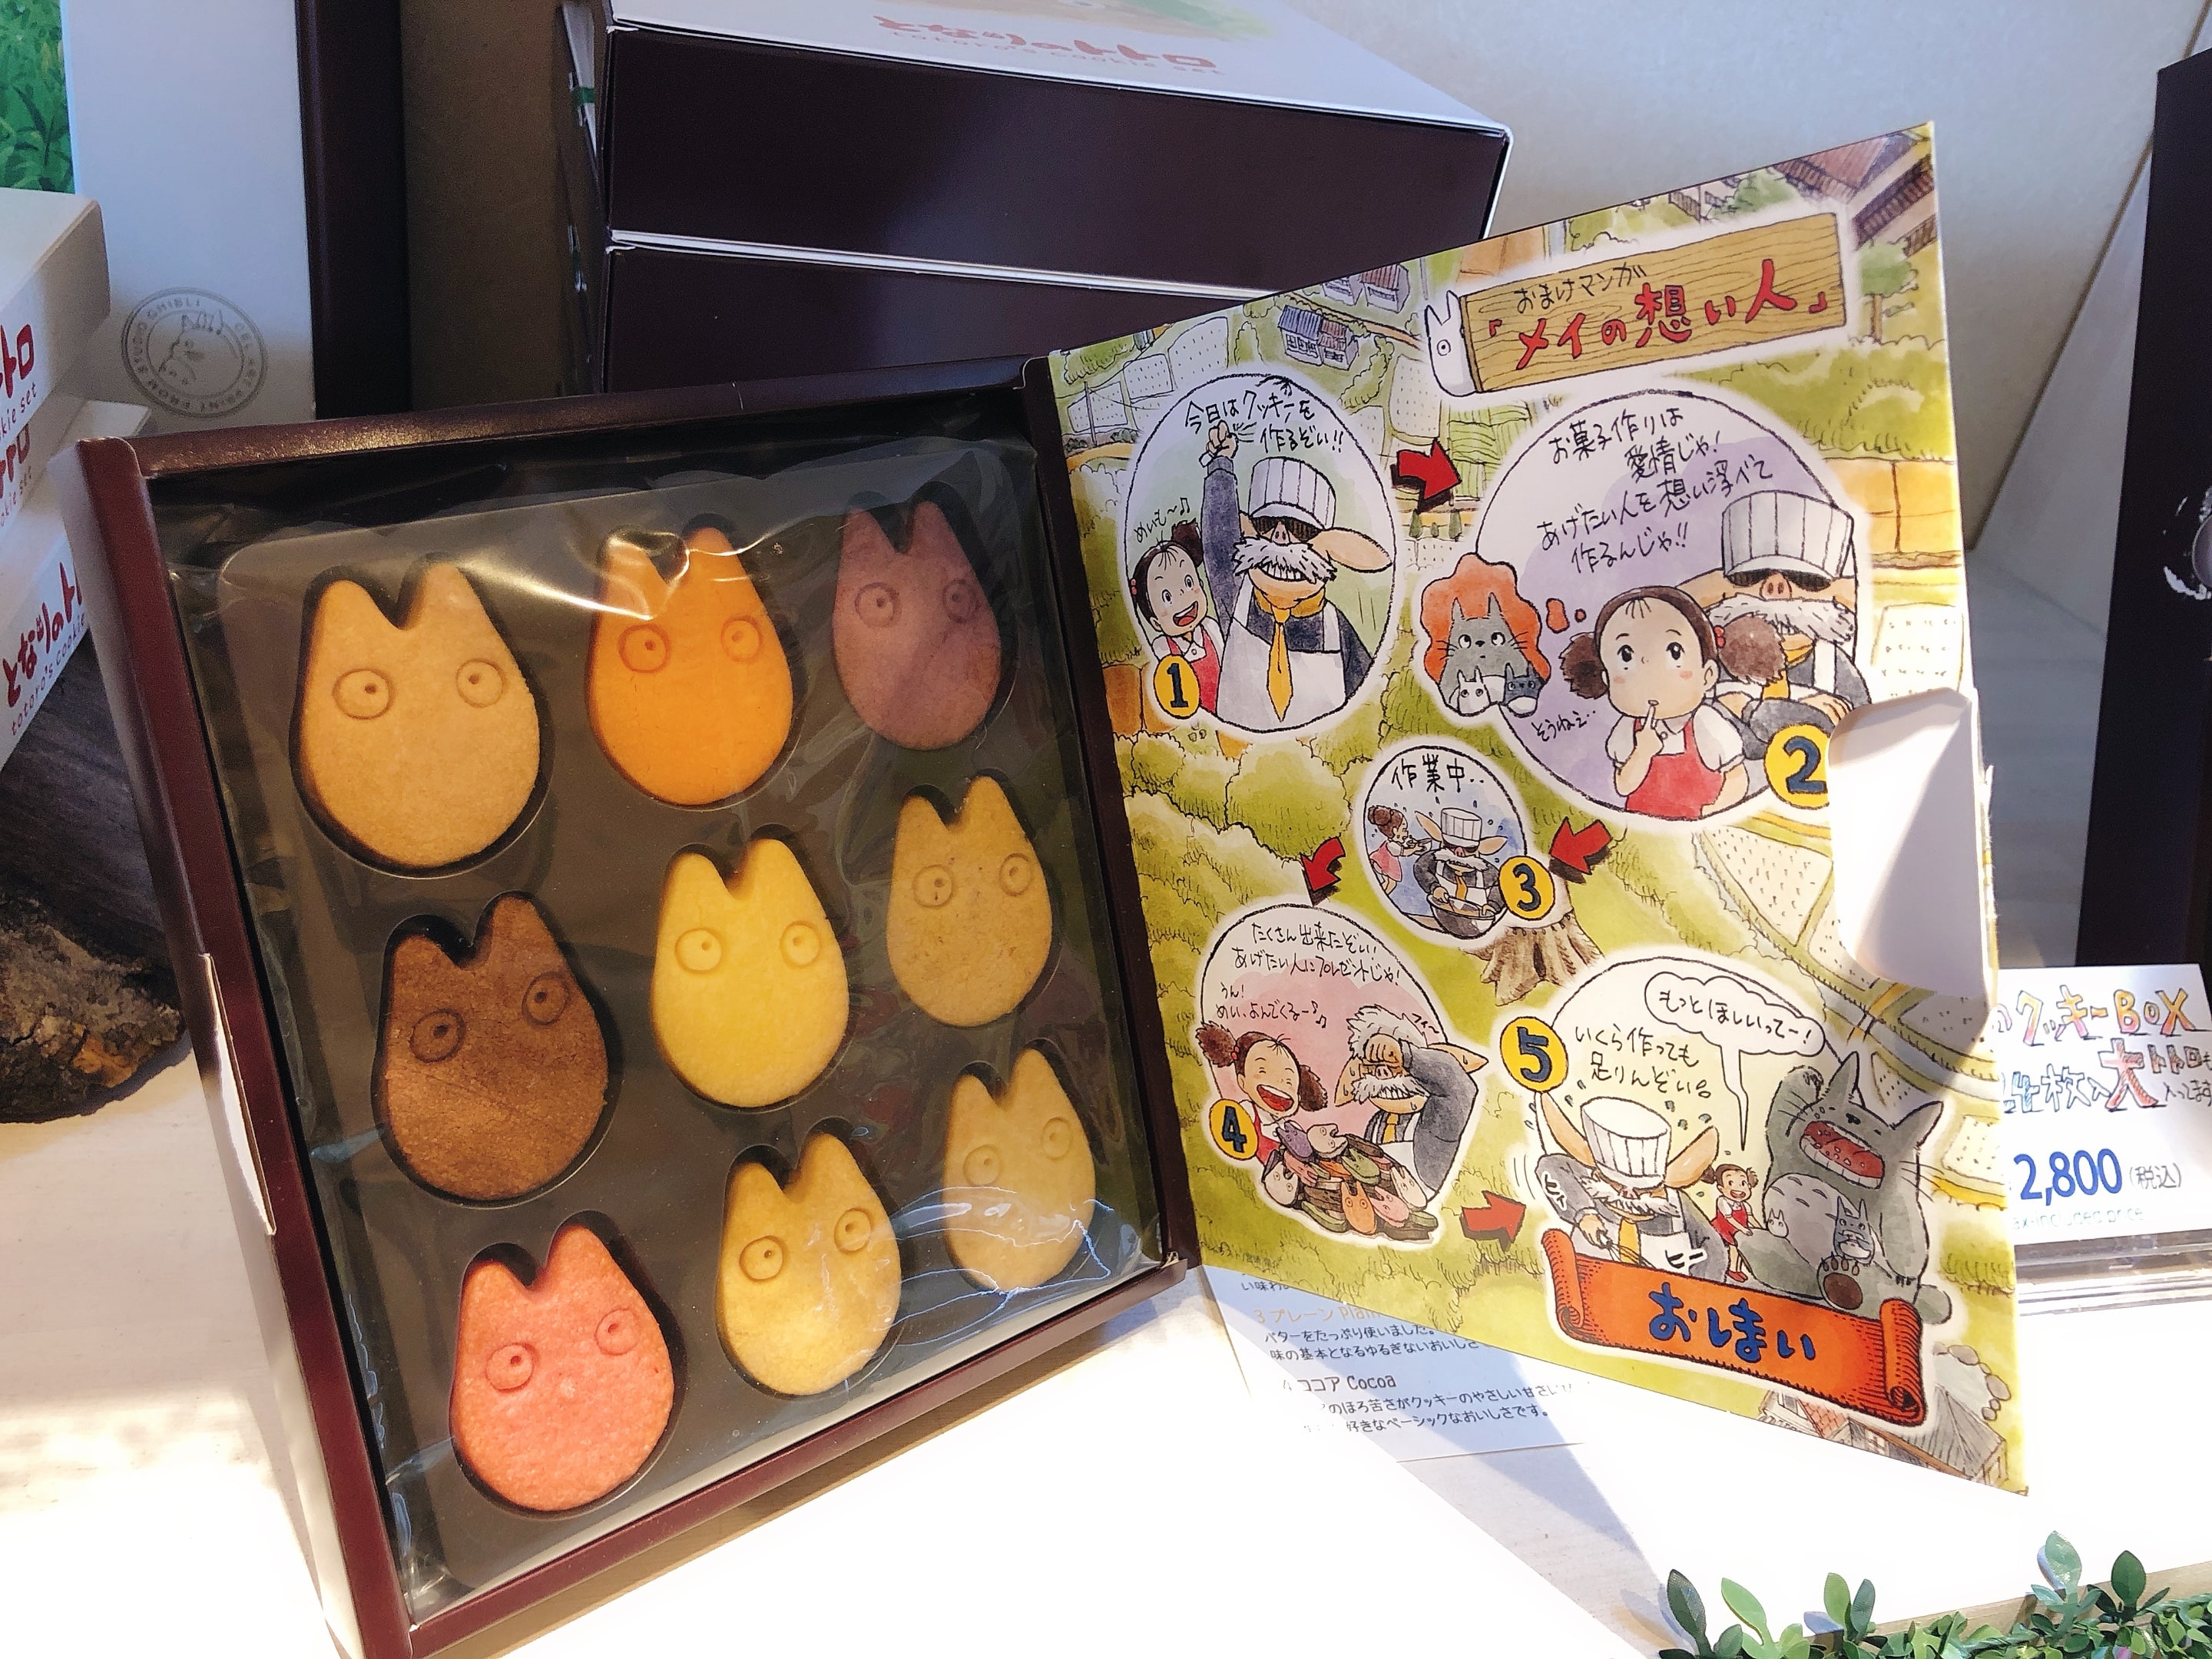 Totoro-shaped cookies sold at Shirohige Cream Puff Factory in Kishijoji